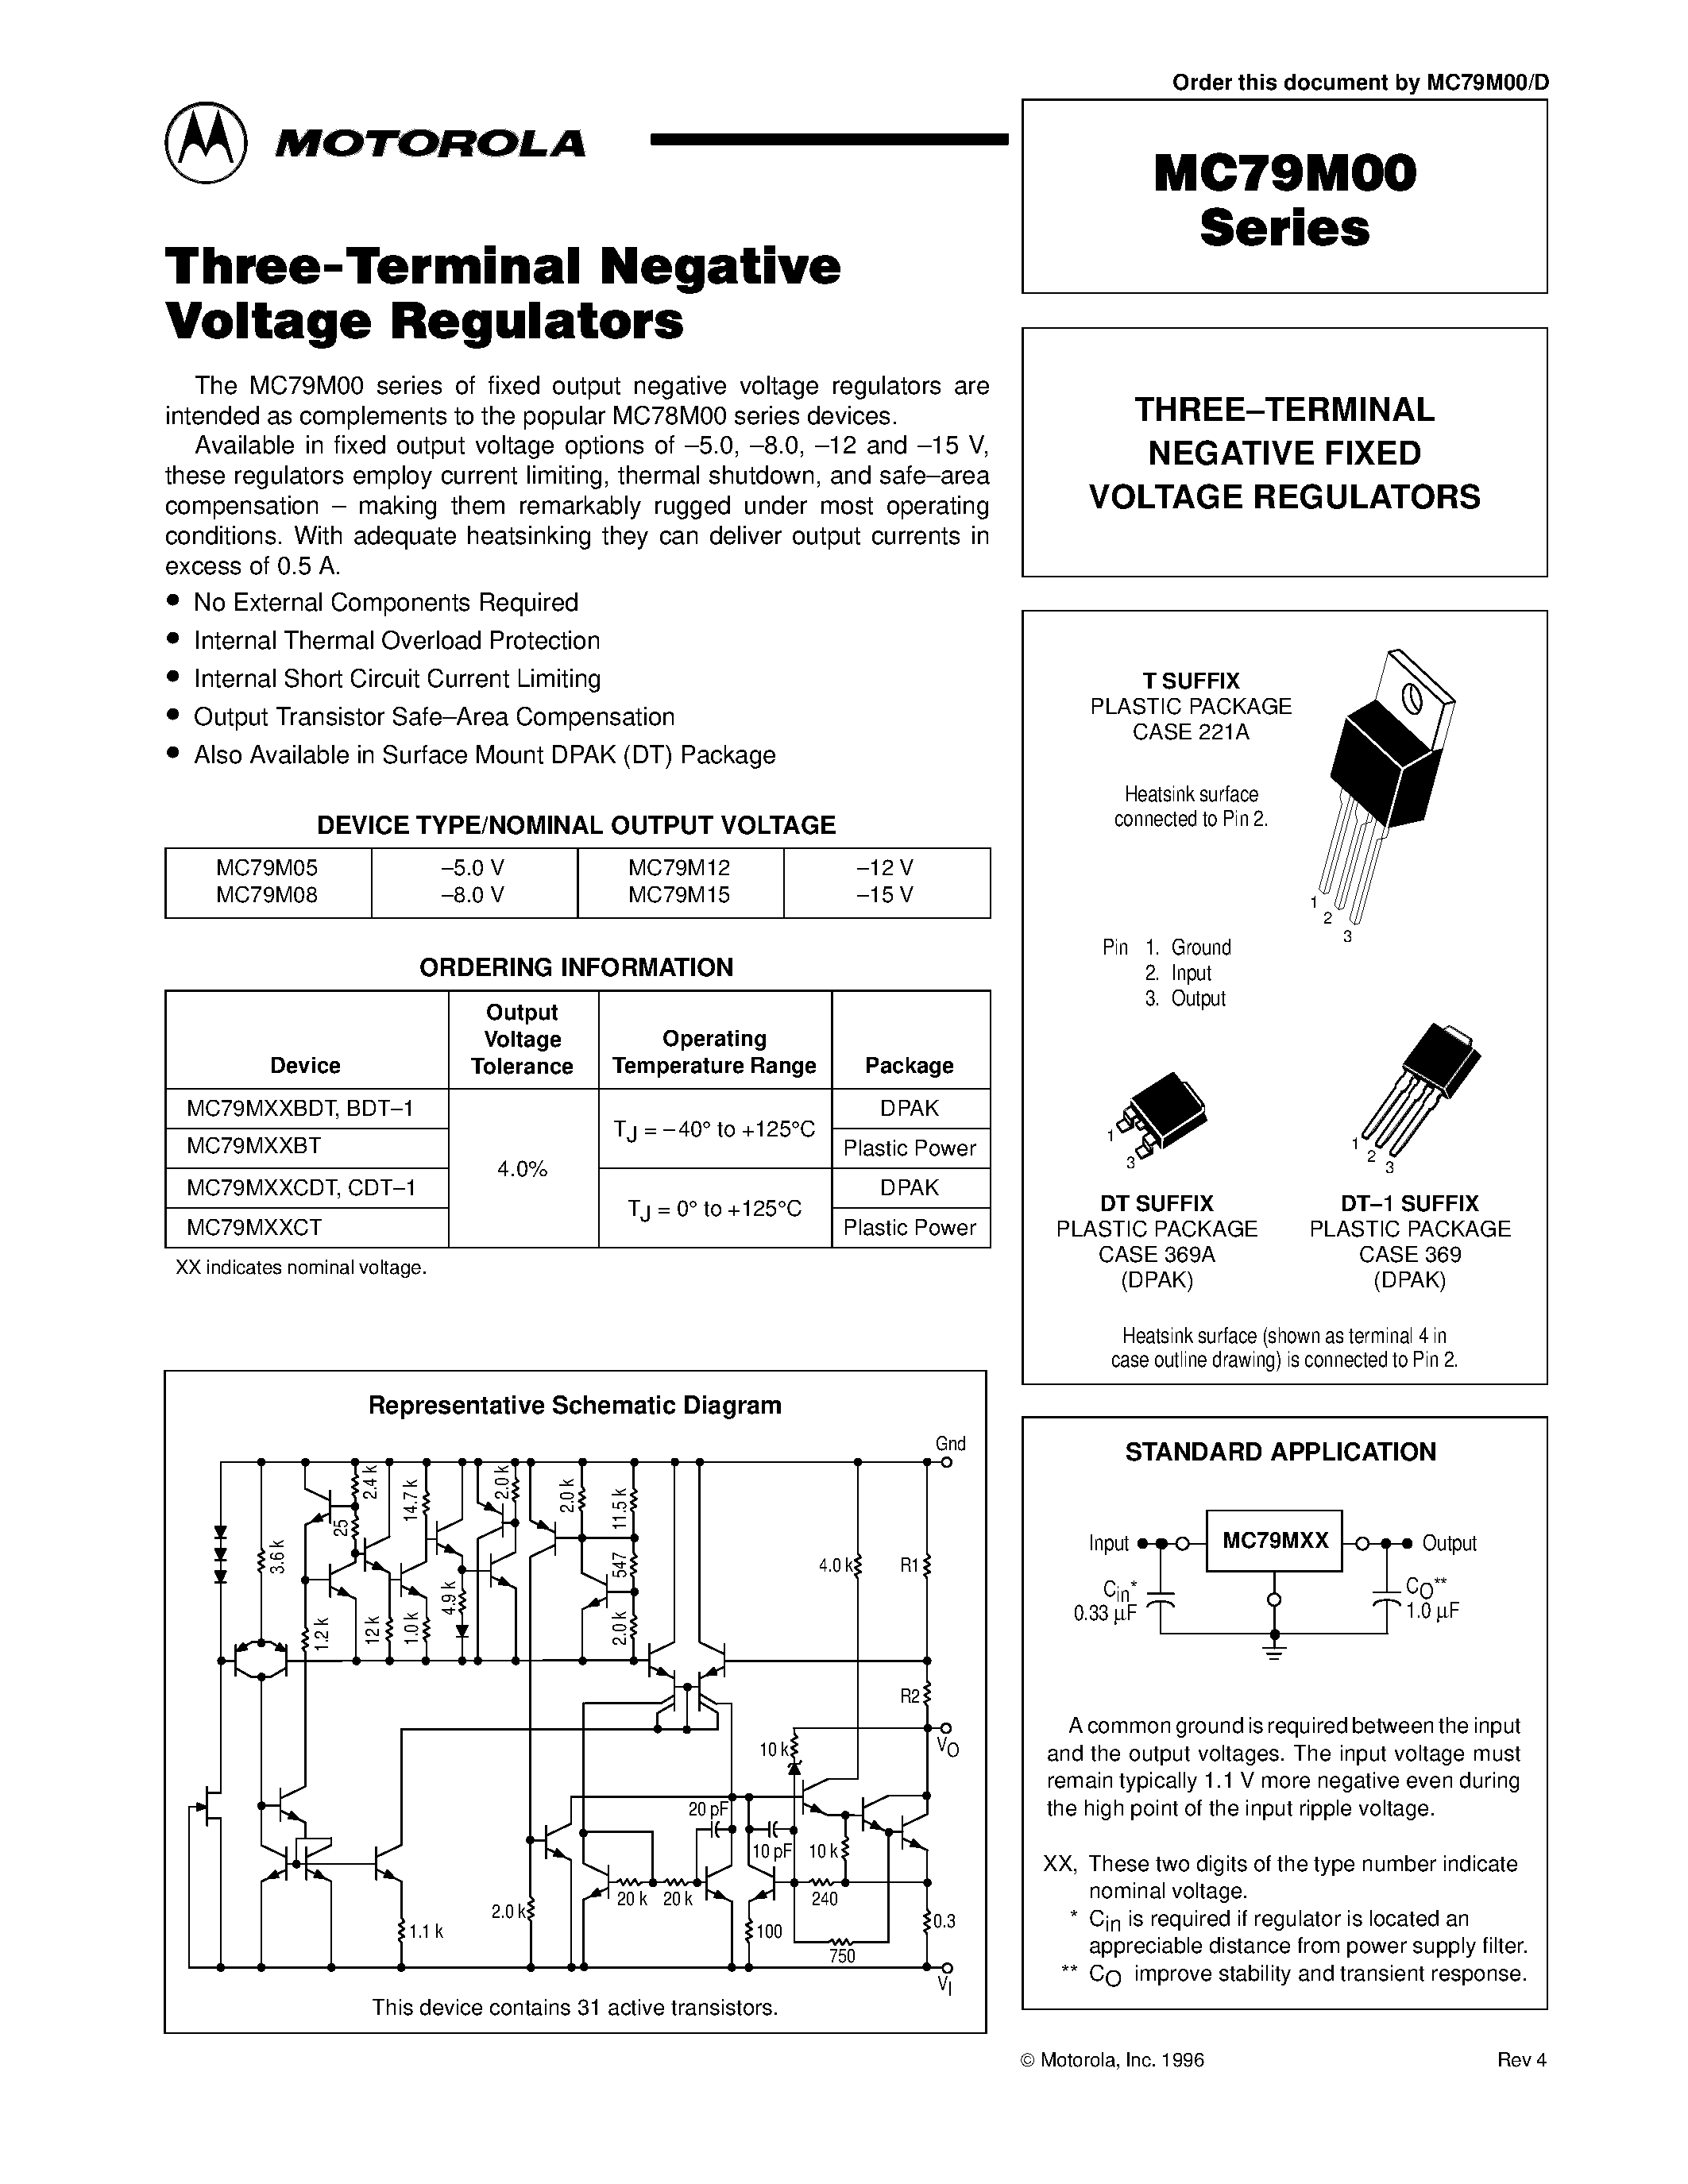 Datasheet MC79M12CT - THREE-TERMINAL NEGATIVE FIXED VOLTAGE REGULATORS page 1